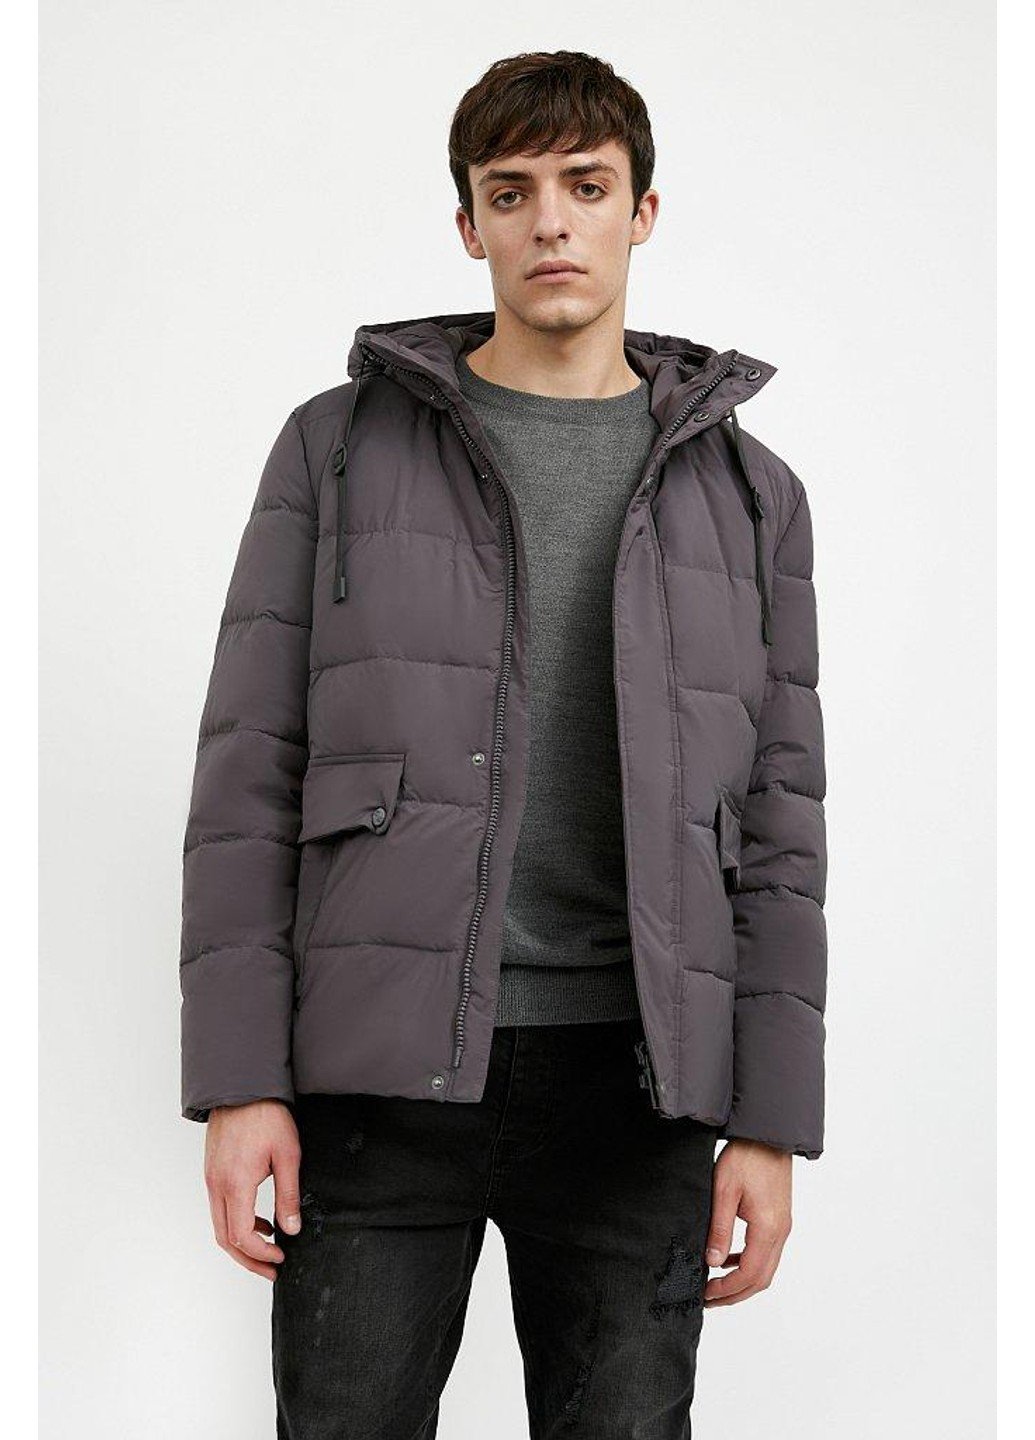 Сіра зимня зимова куртка a20-22001-202 Finn Flare